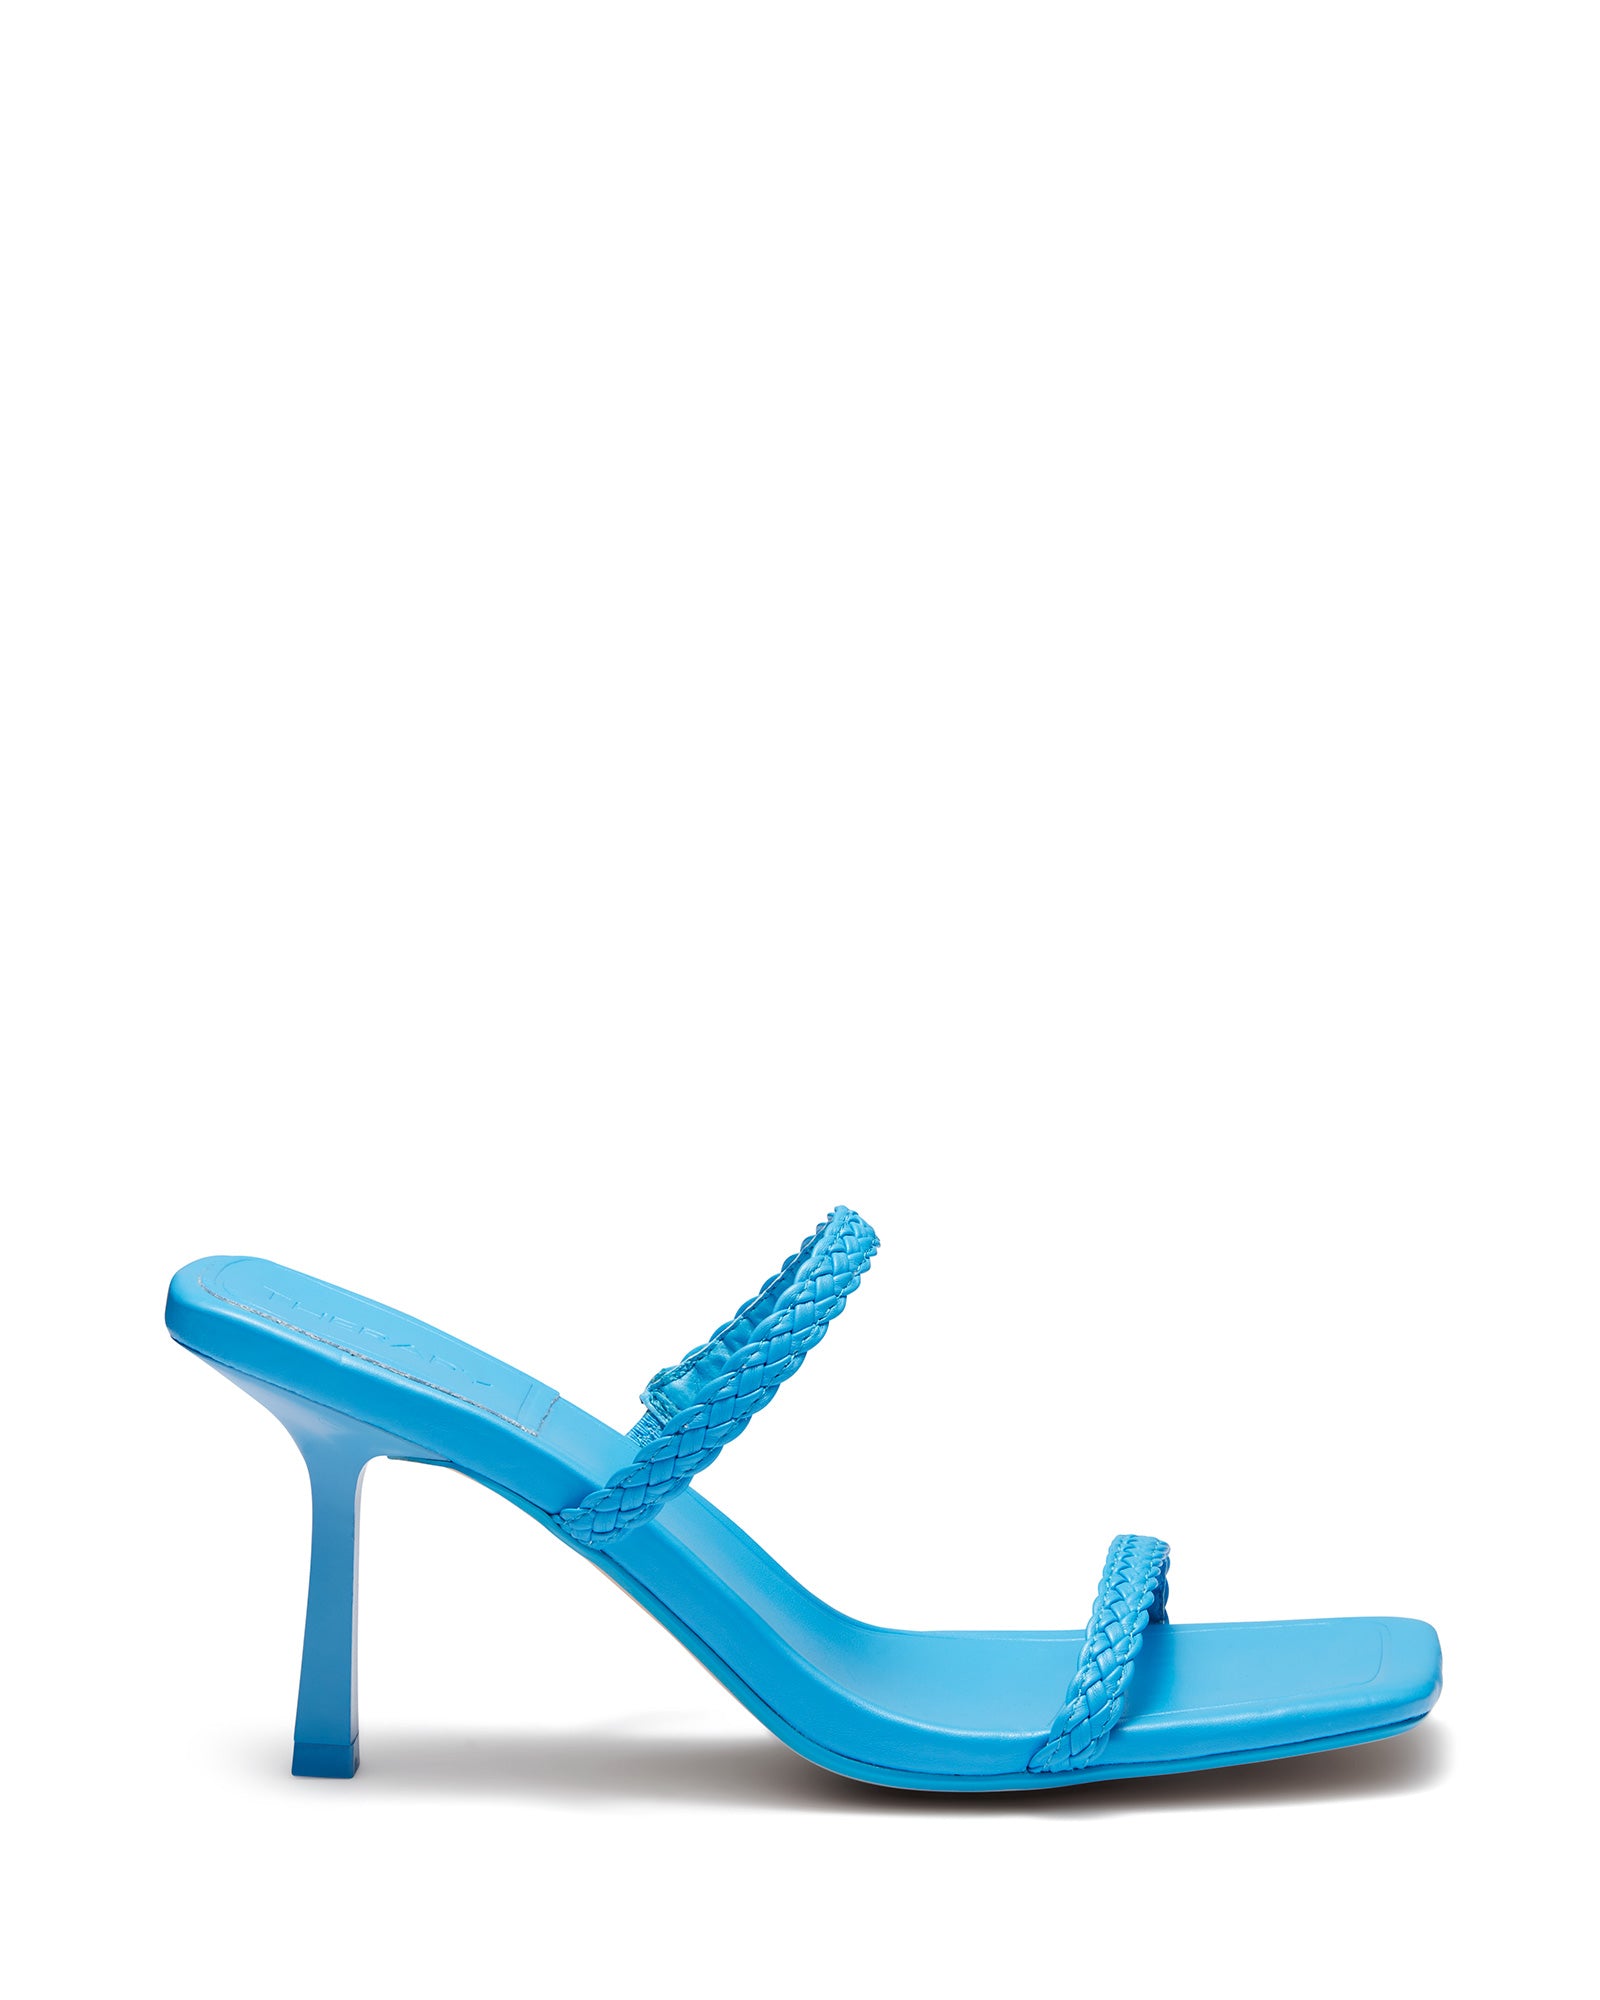 Therapy Shoes Drew Azure | Women's Heels | Sandals | Stiletto | Braided